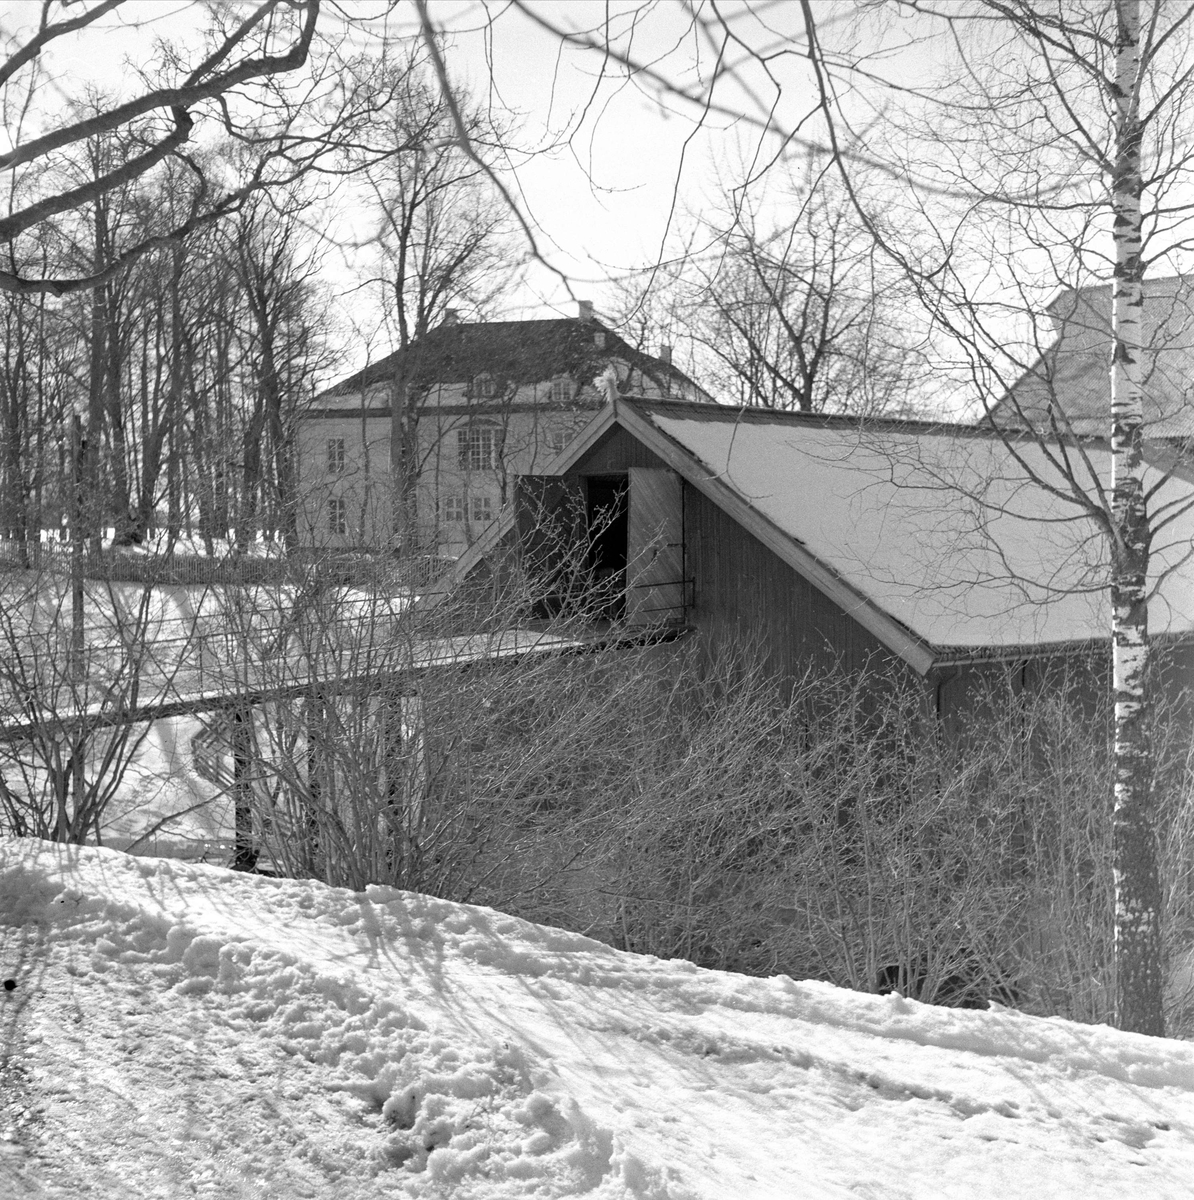 Eidsvollsbygningen, Eidsvoll, 08.04.1958. Sett bak uthus. Vinter.